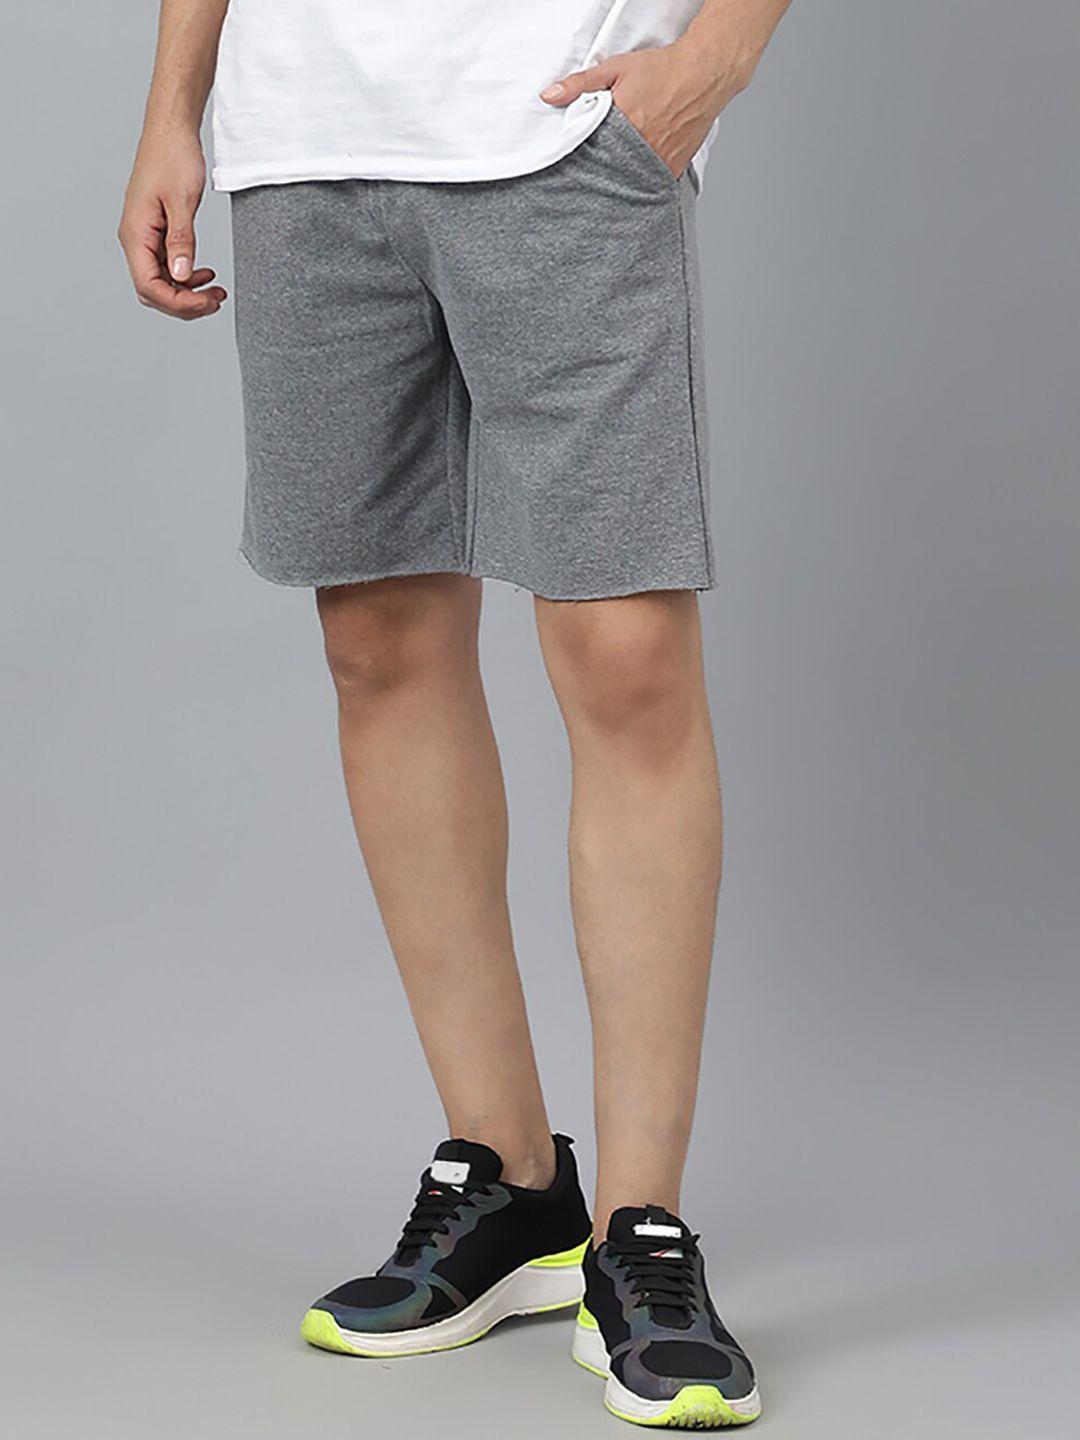 kotty-men-grey-mid-rise-regular-shorts